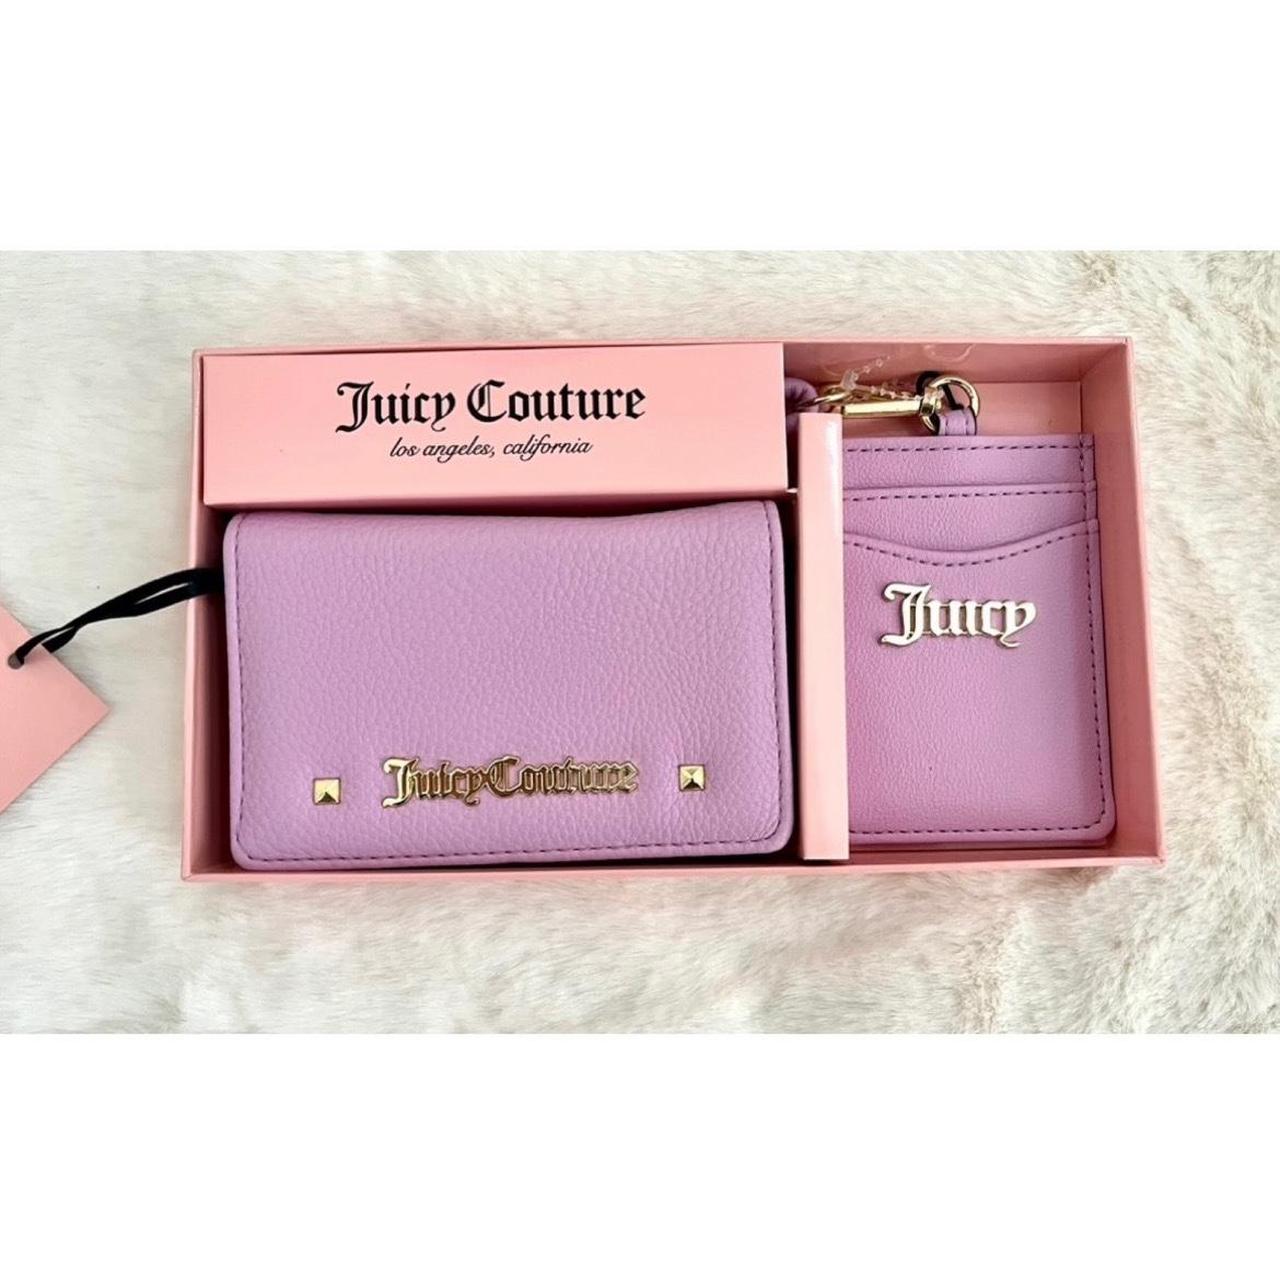 Juicy Couture Velour Bag Purple | eBay